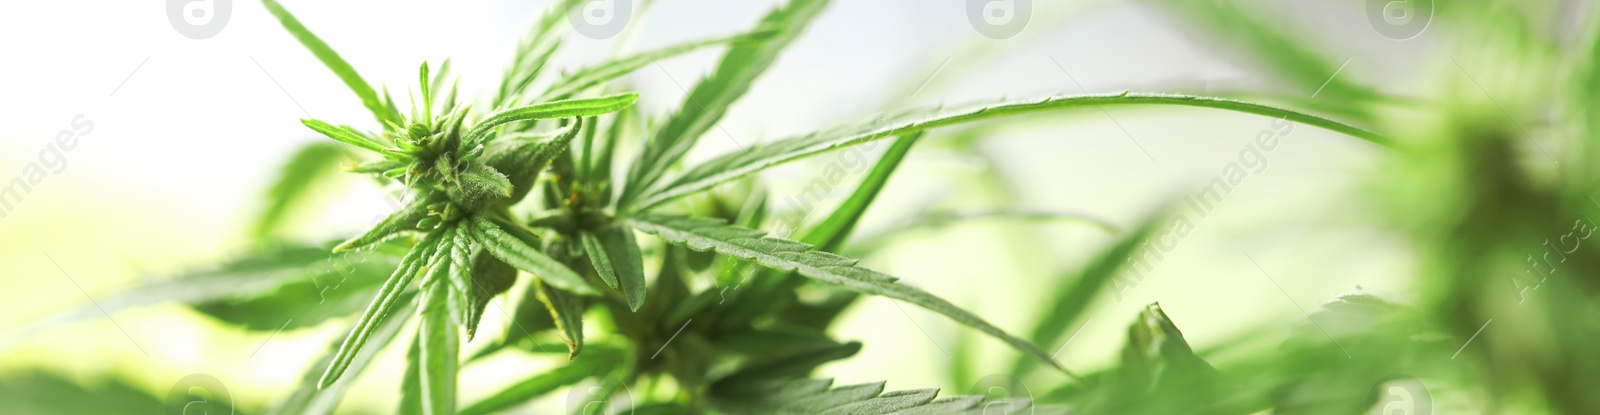 Image of Green hemp on blurred background, closeup. Banner design